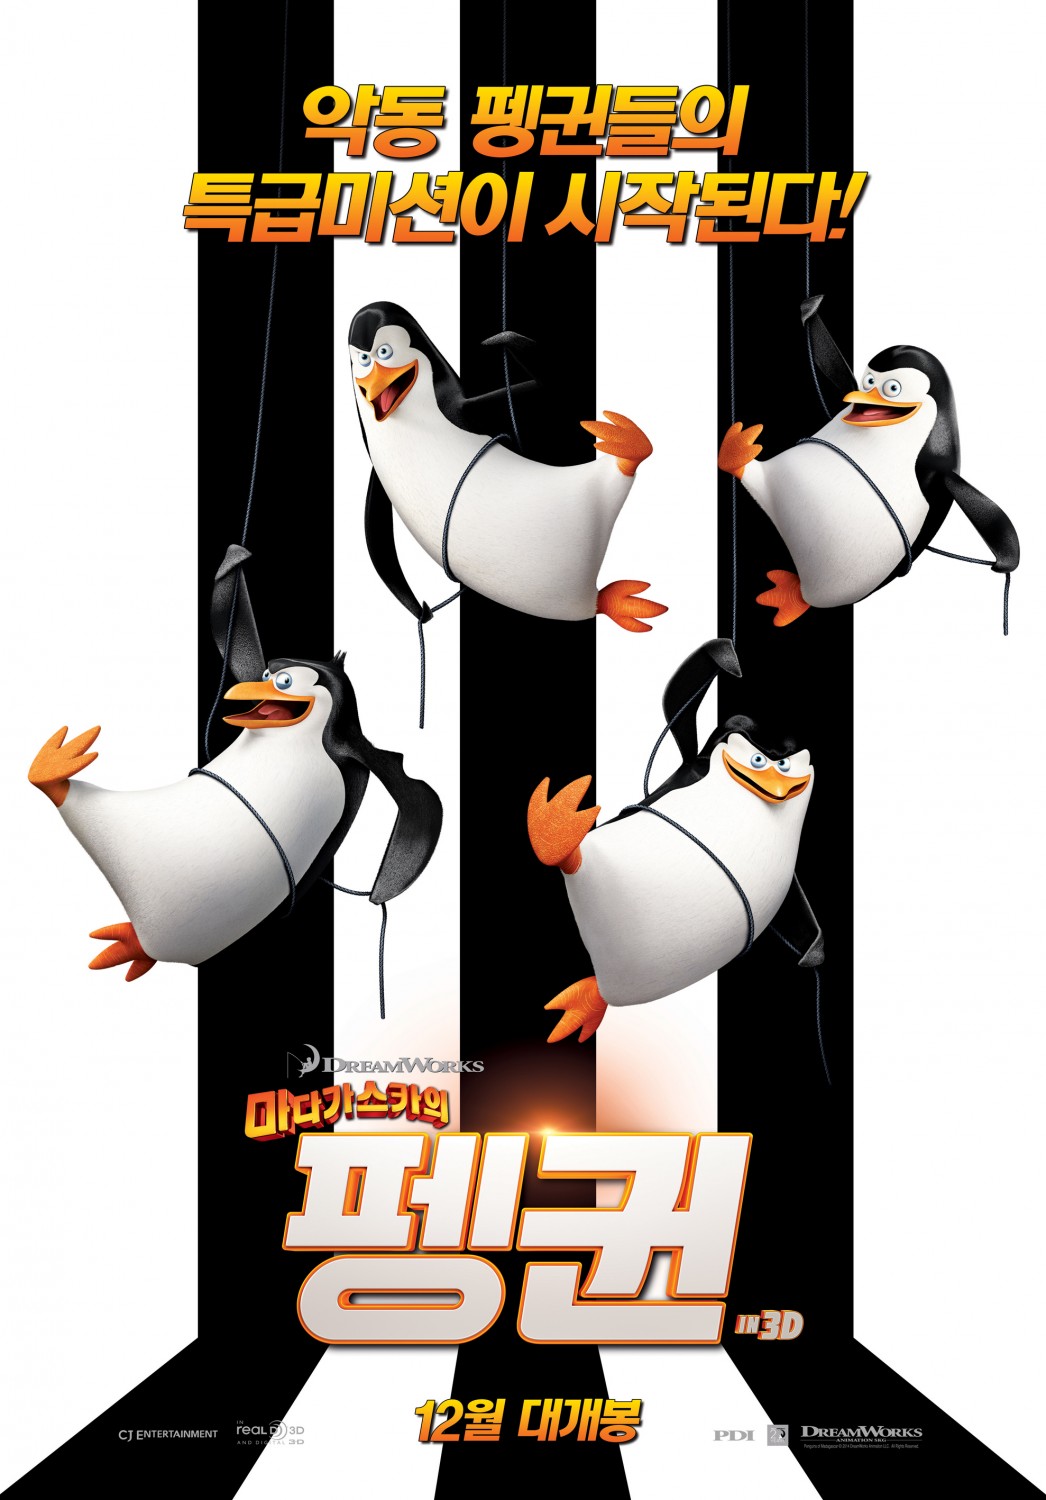 Постер - Пингвины Мадагаскара: 1046x1500 / 218 Кб